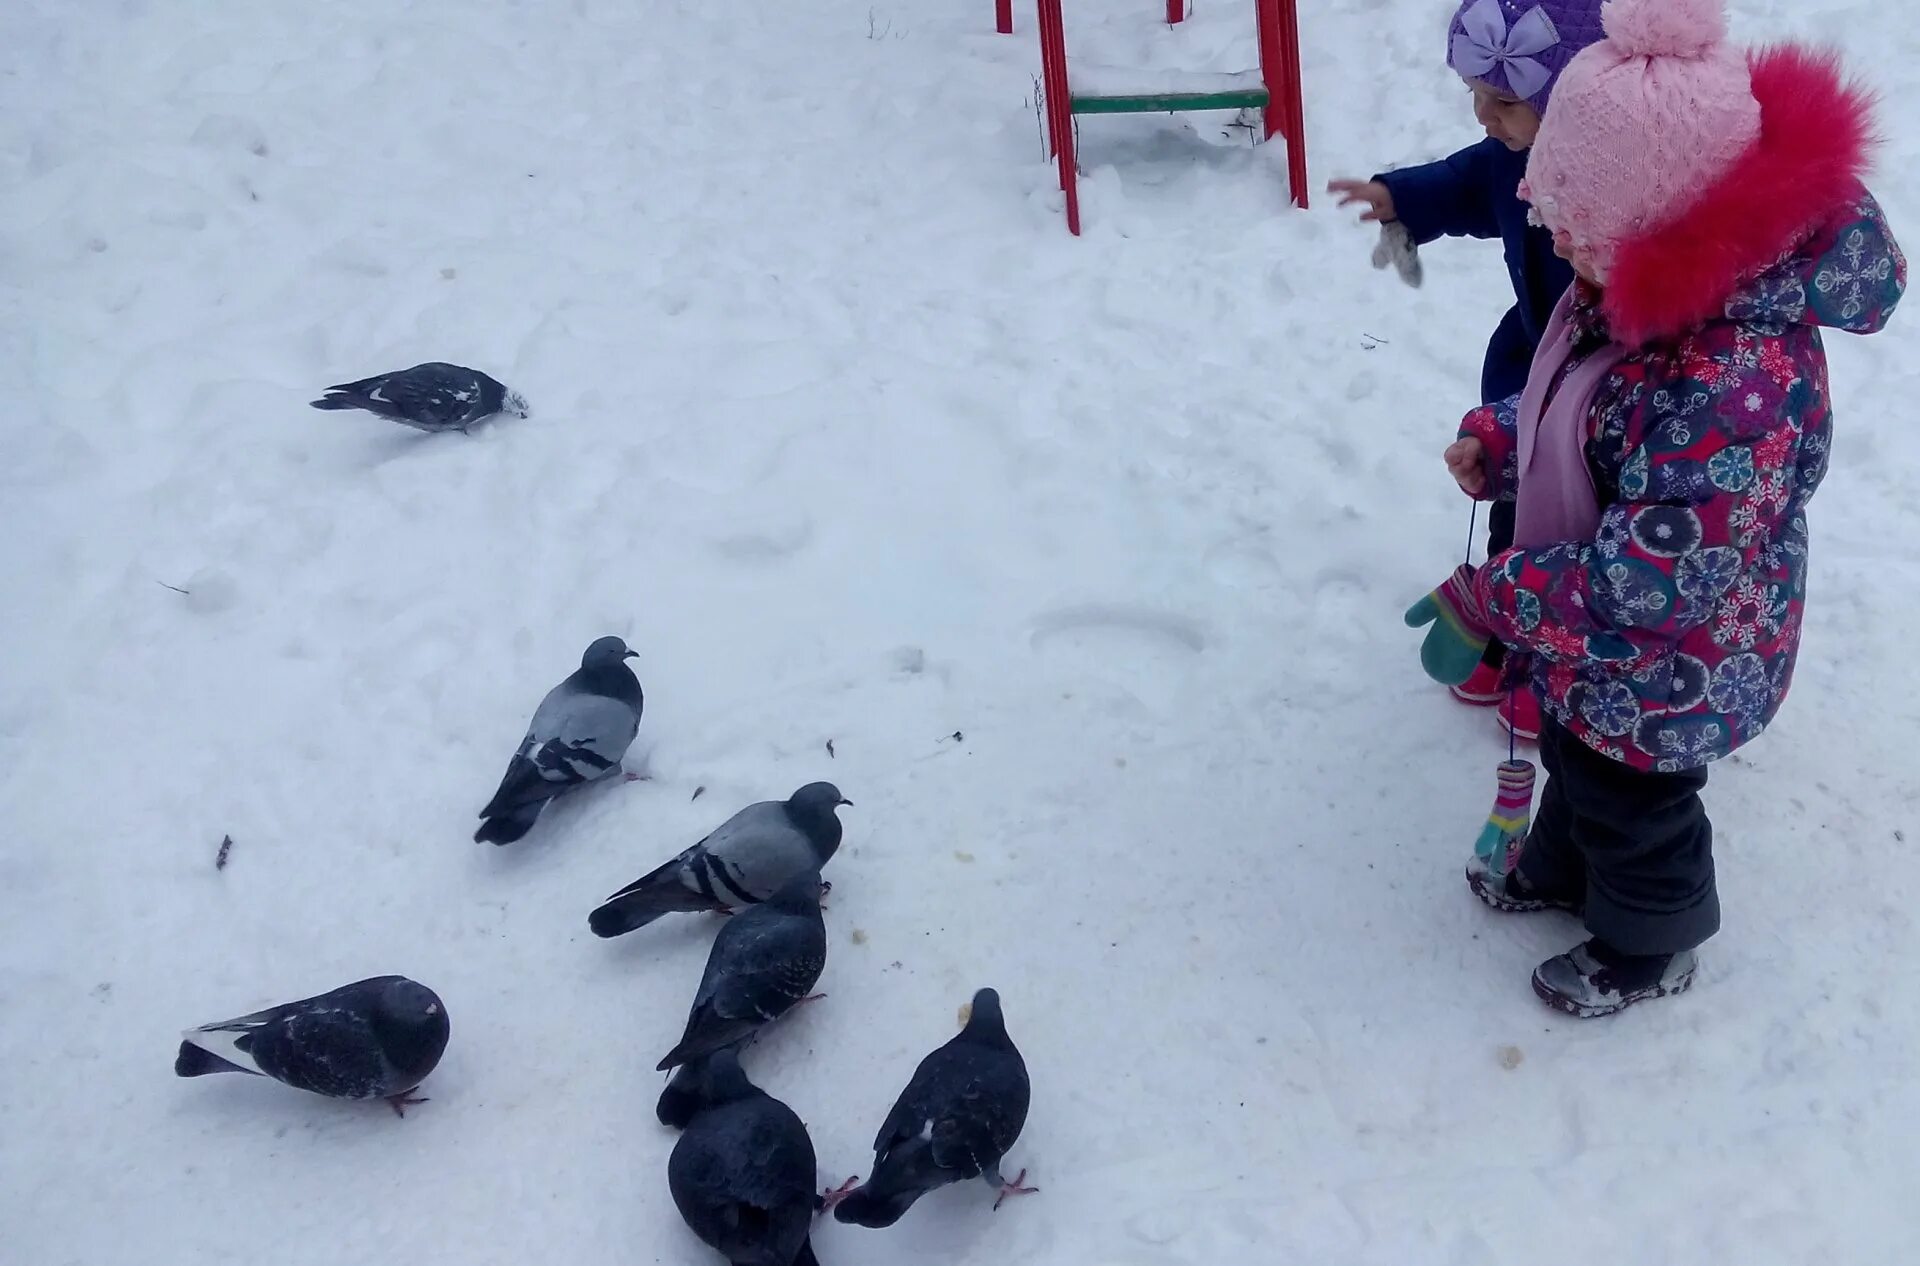 Как заботиться о птицах. Забота о птицах. Дети кормят птиц зимой. Дети заботятся о птицах. Забота о птицах в зимний период.